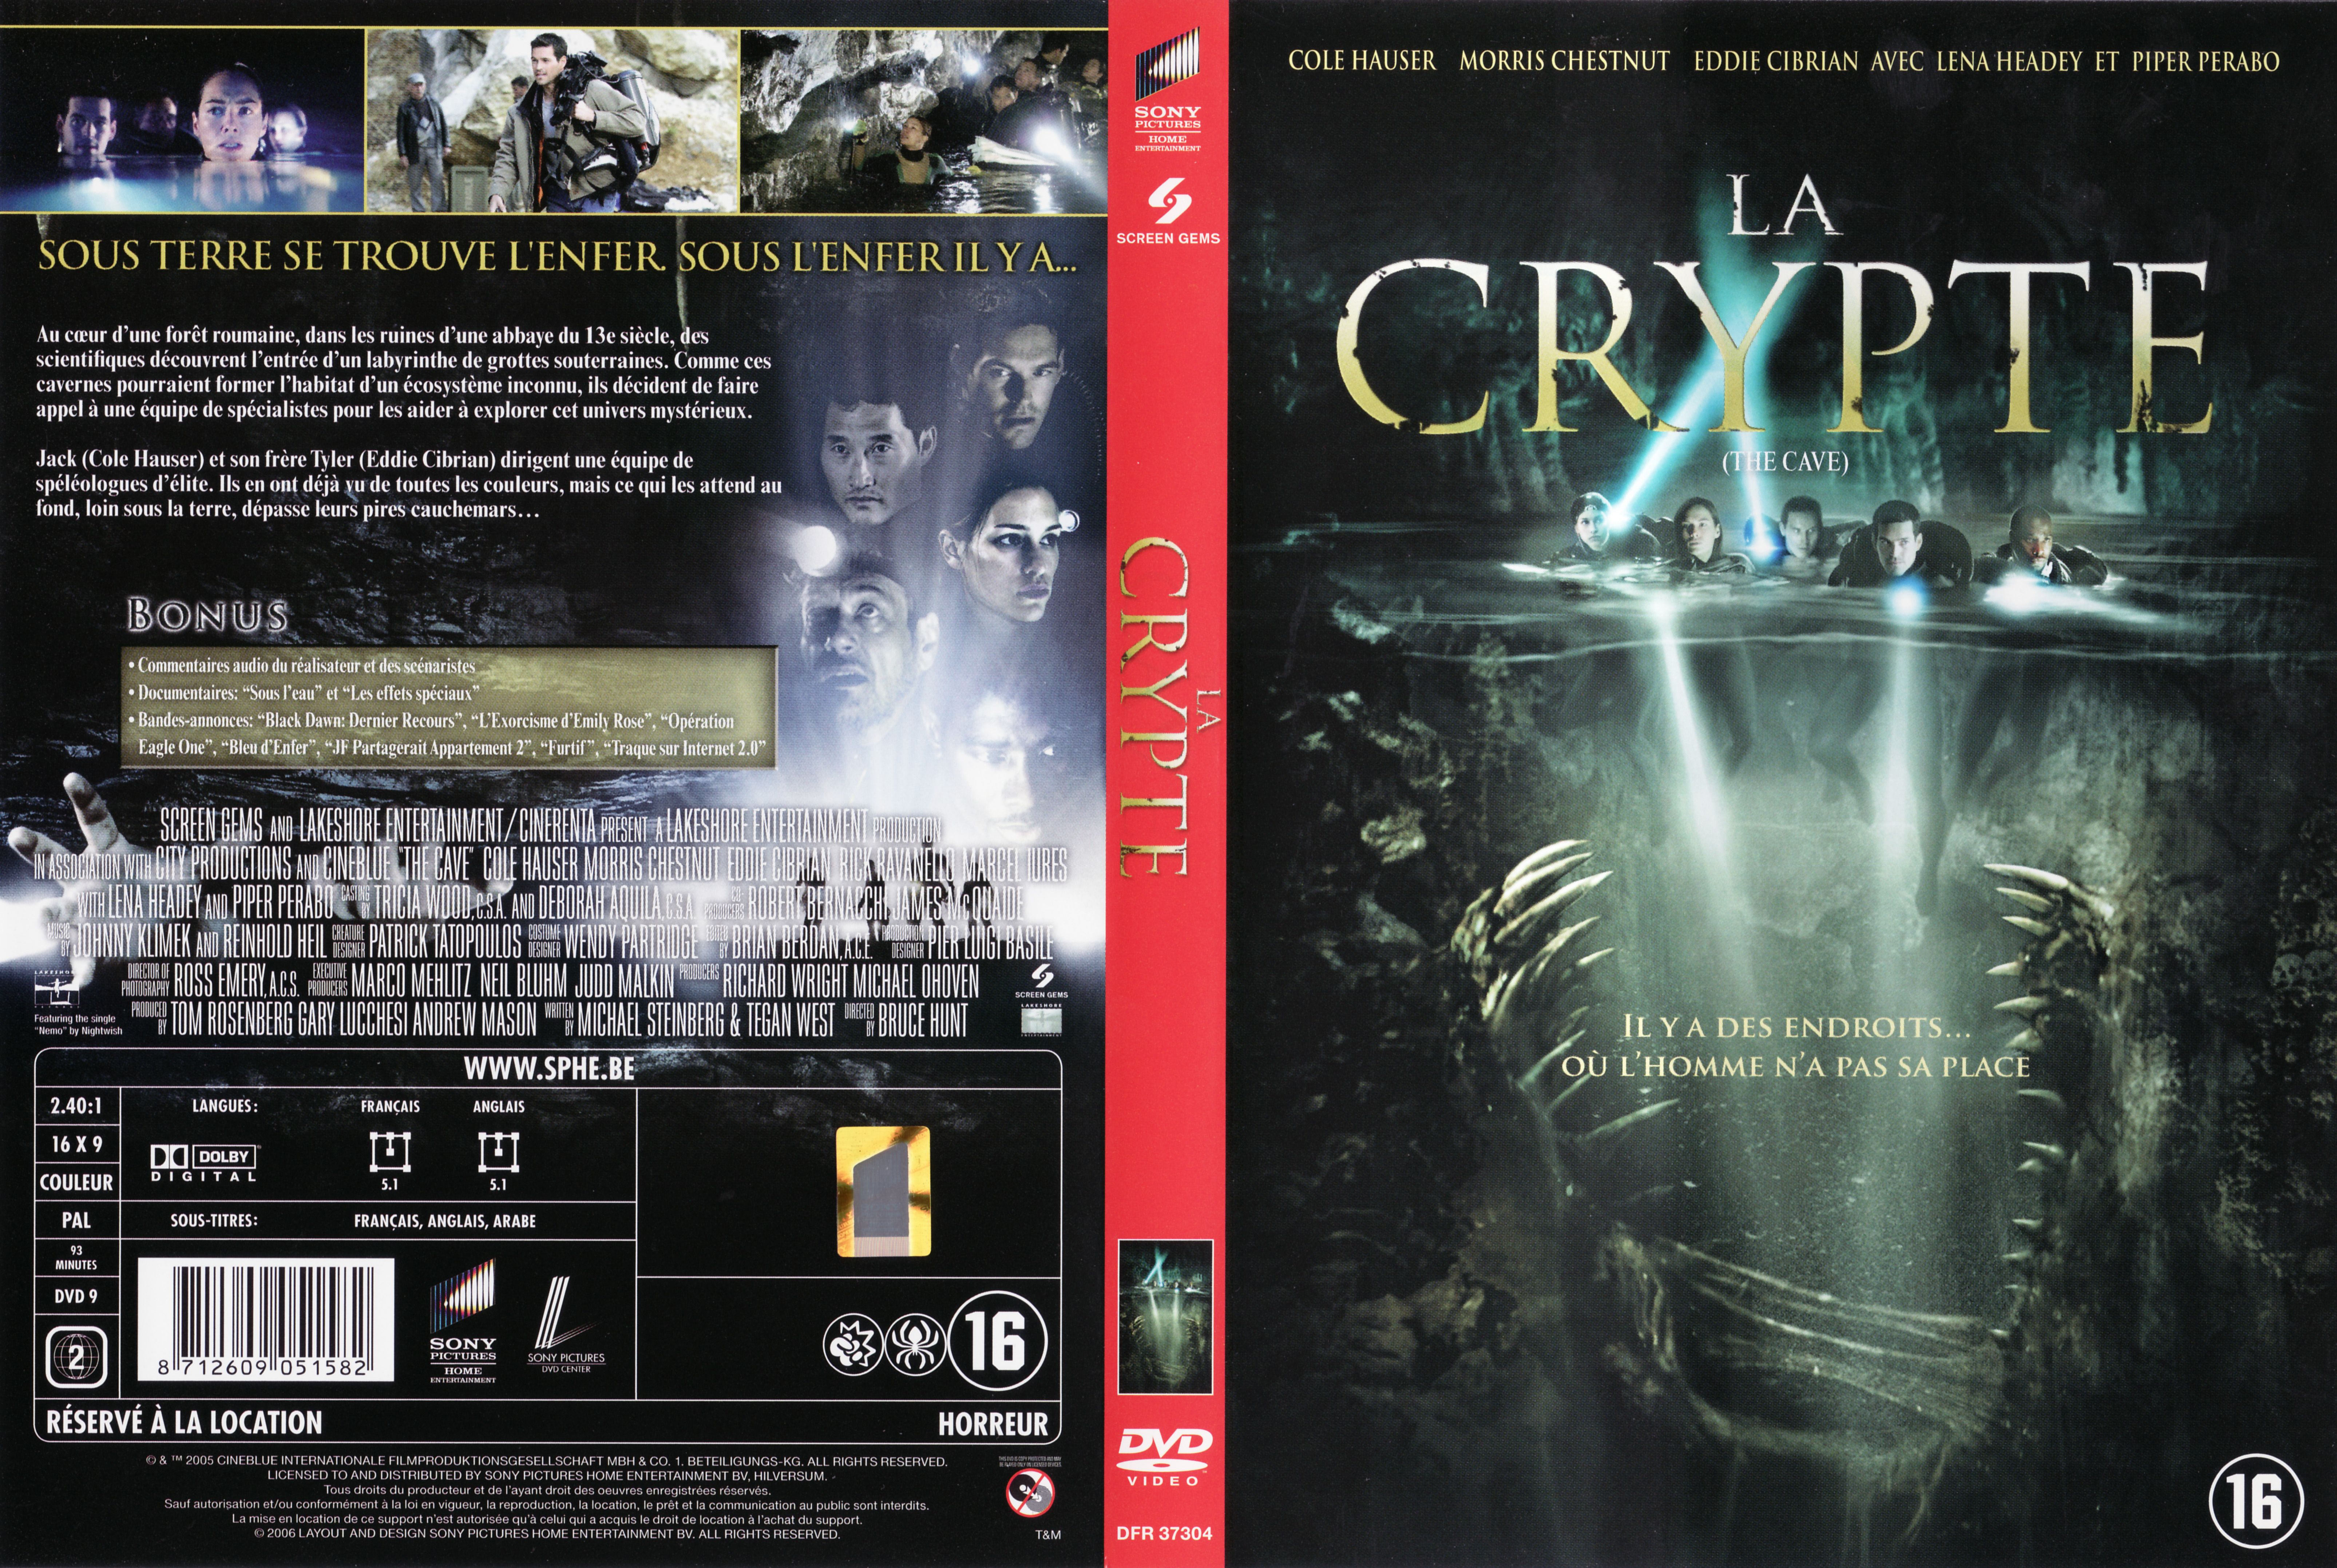 Jaquette DVD La crypte v2